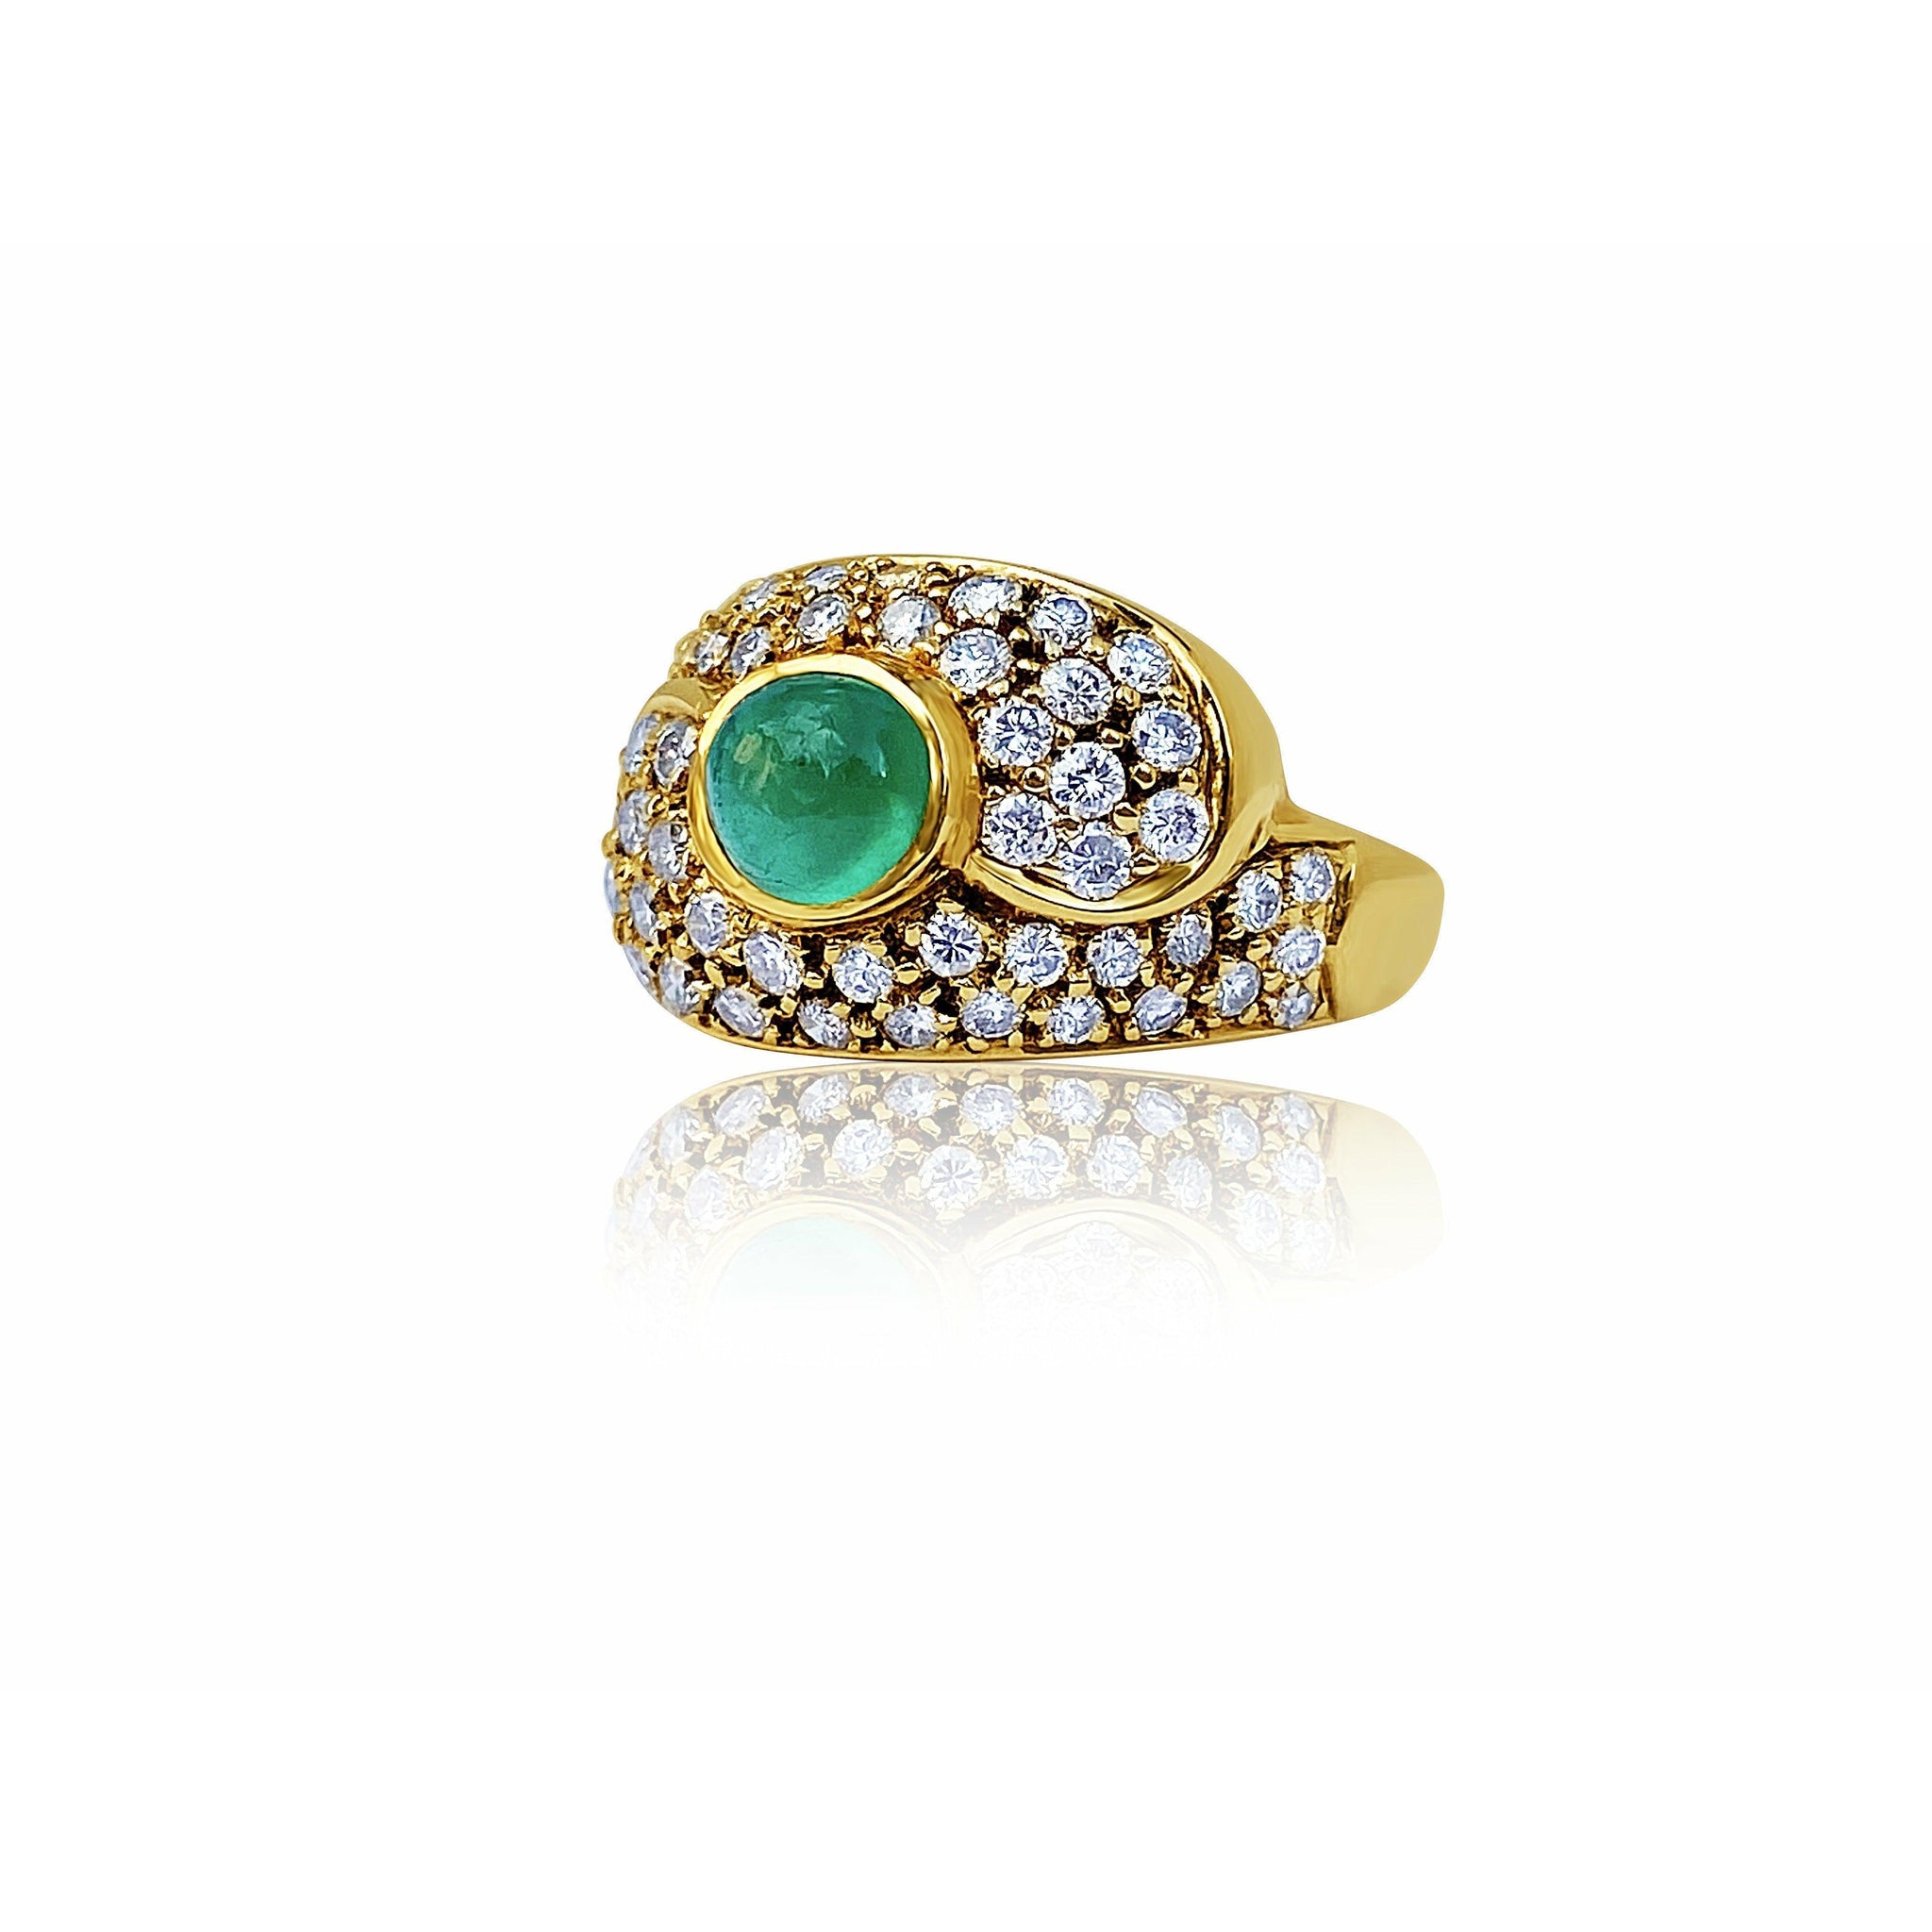 1 Carat Vintage Cabochon Cut Natural Emerald Ring in 18k yellow gold - ASSAY